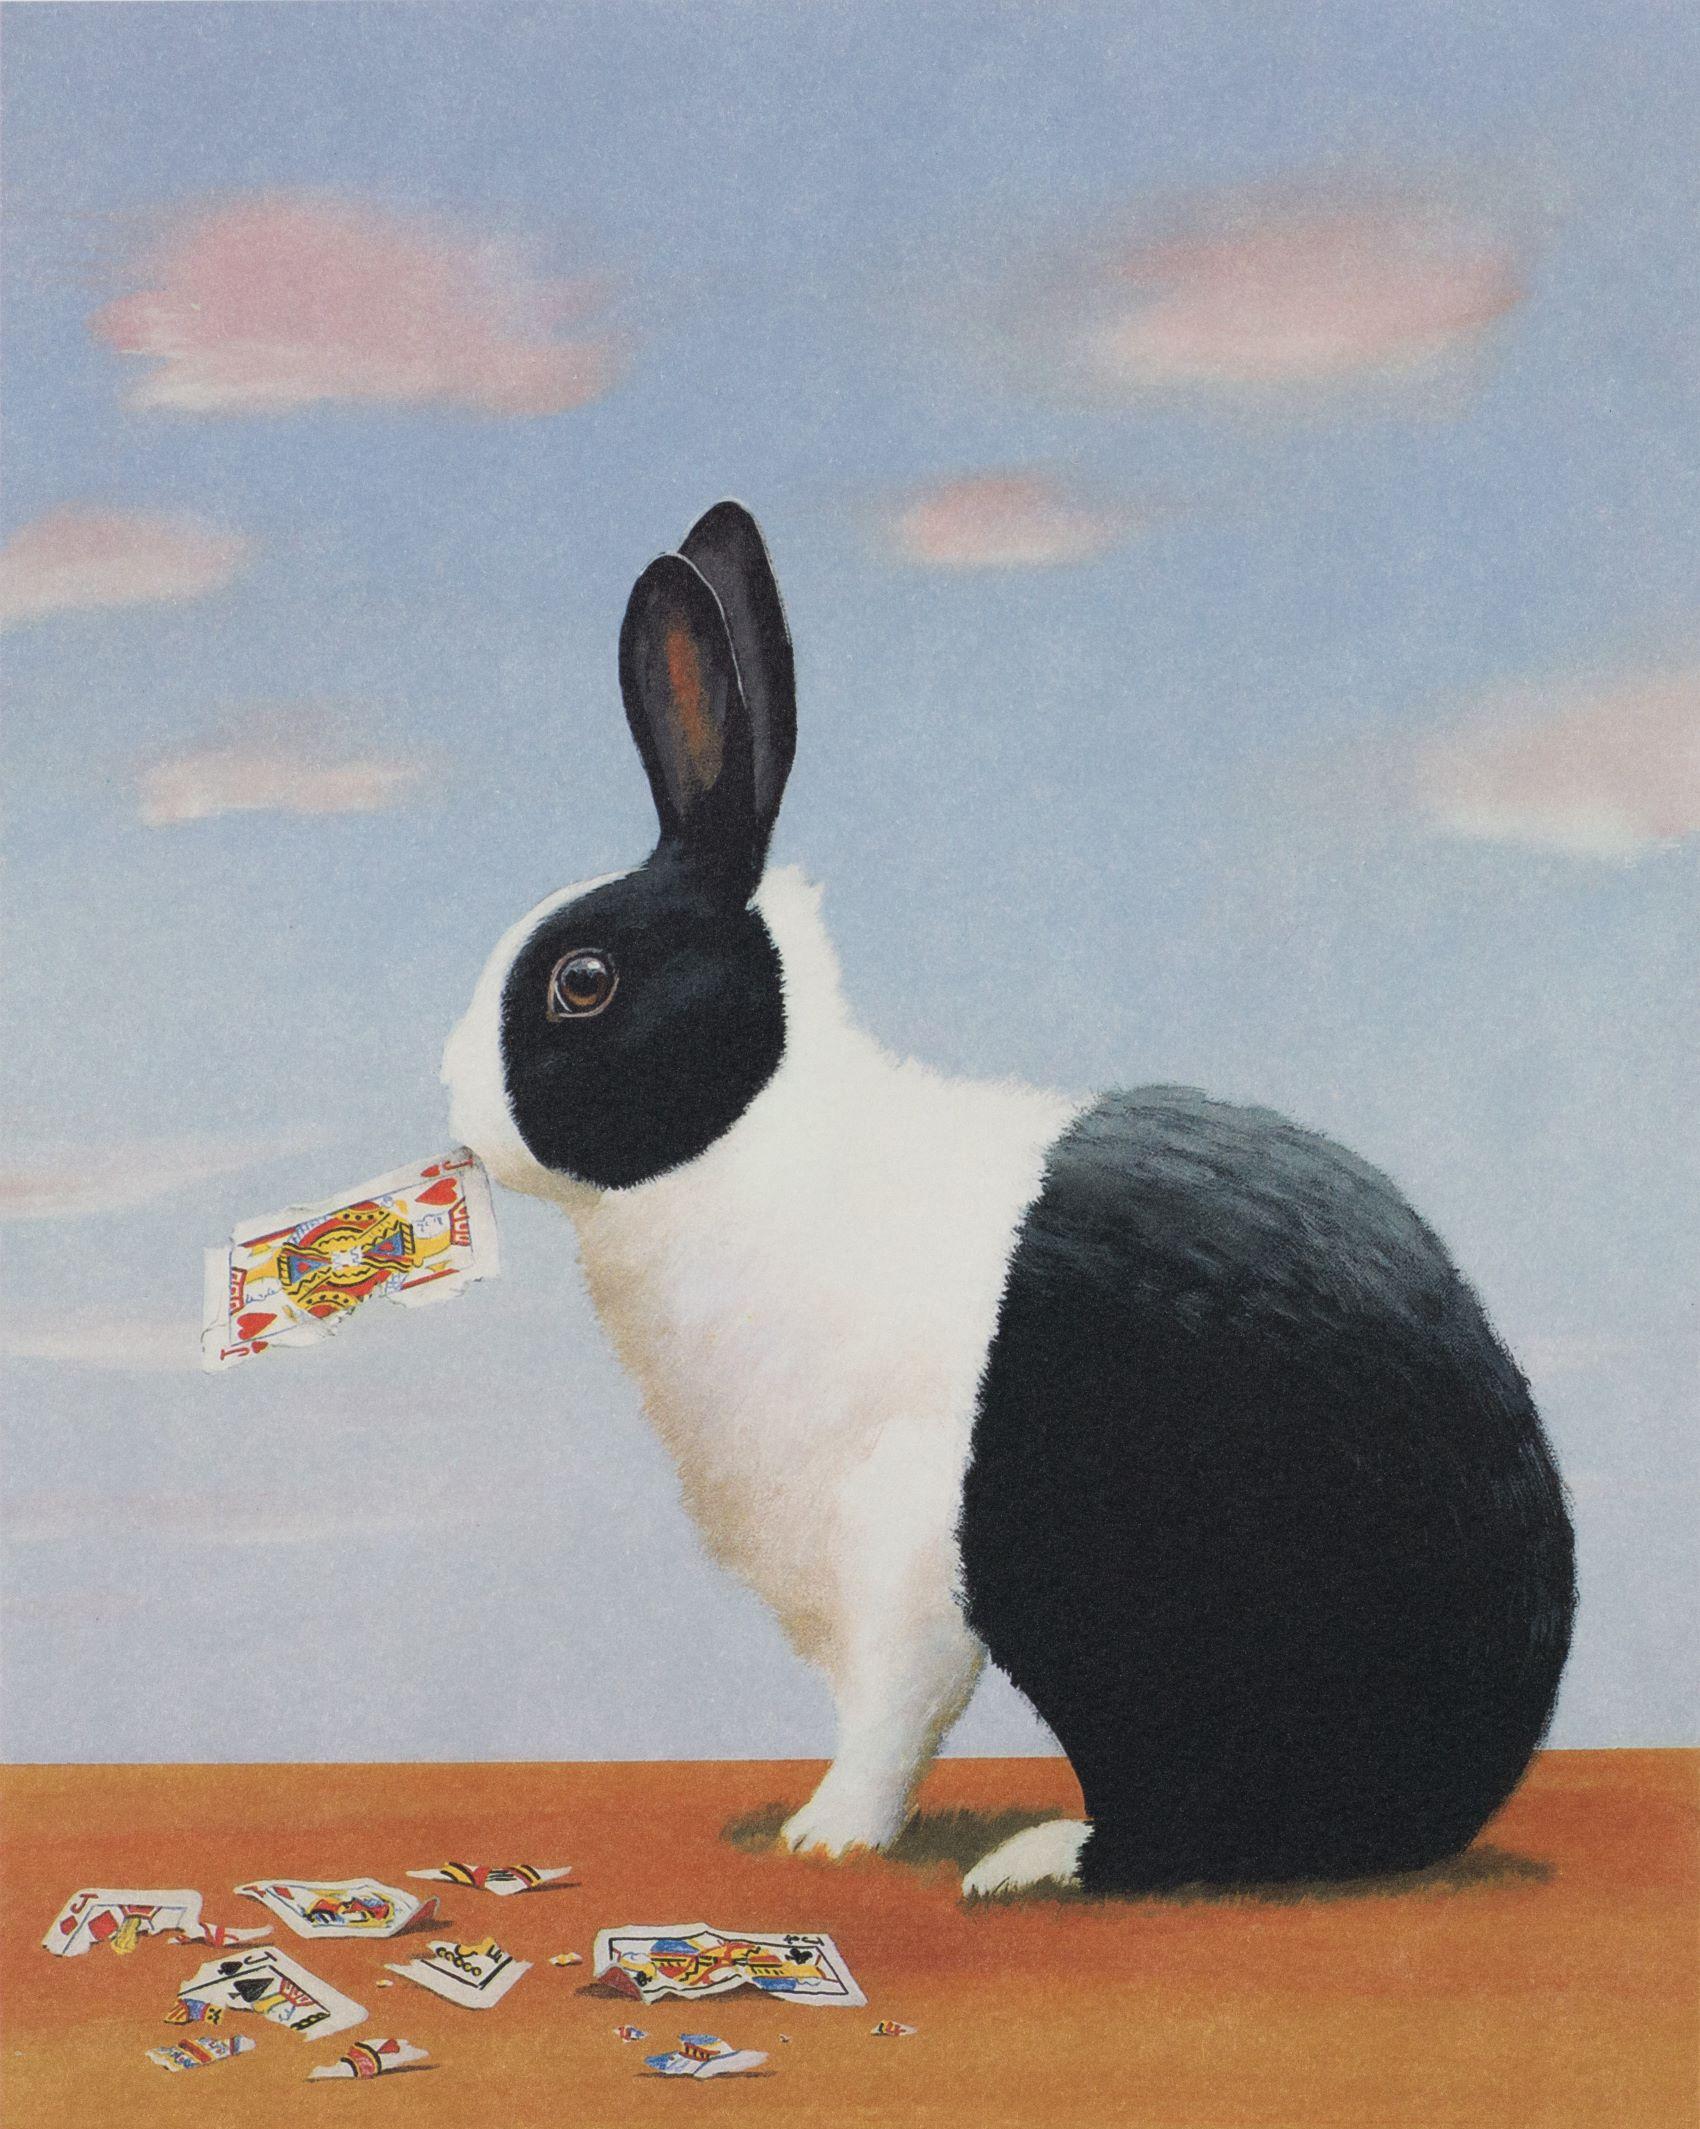 Jack Rabbit  - Contemporary Print by Robert Deyber 